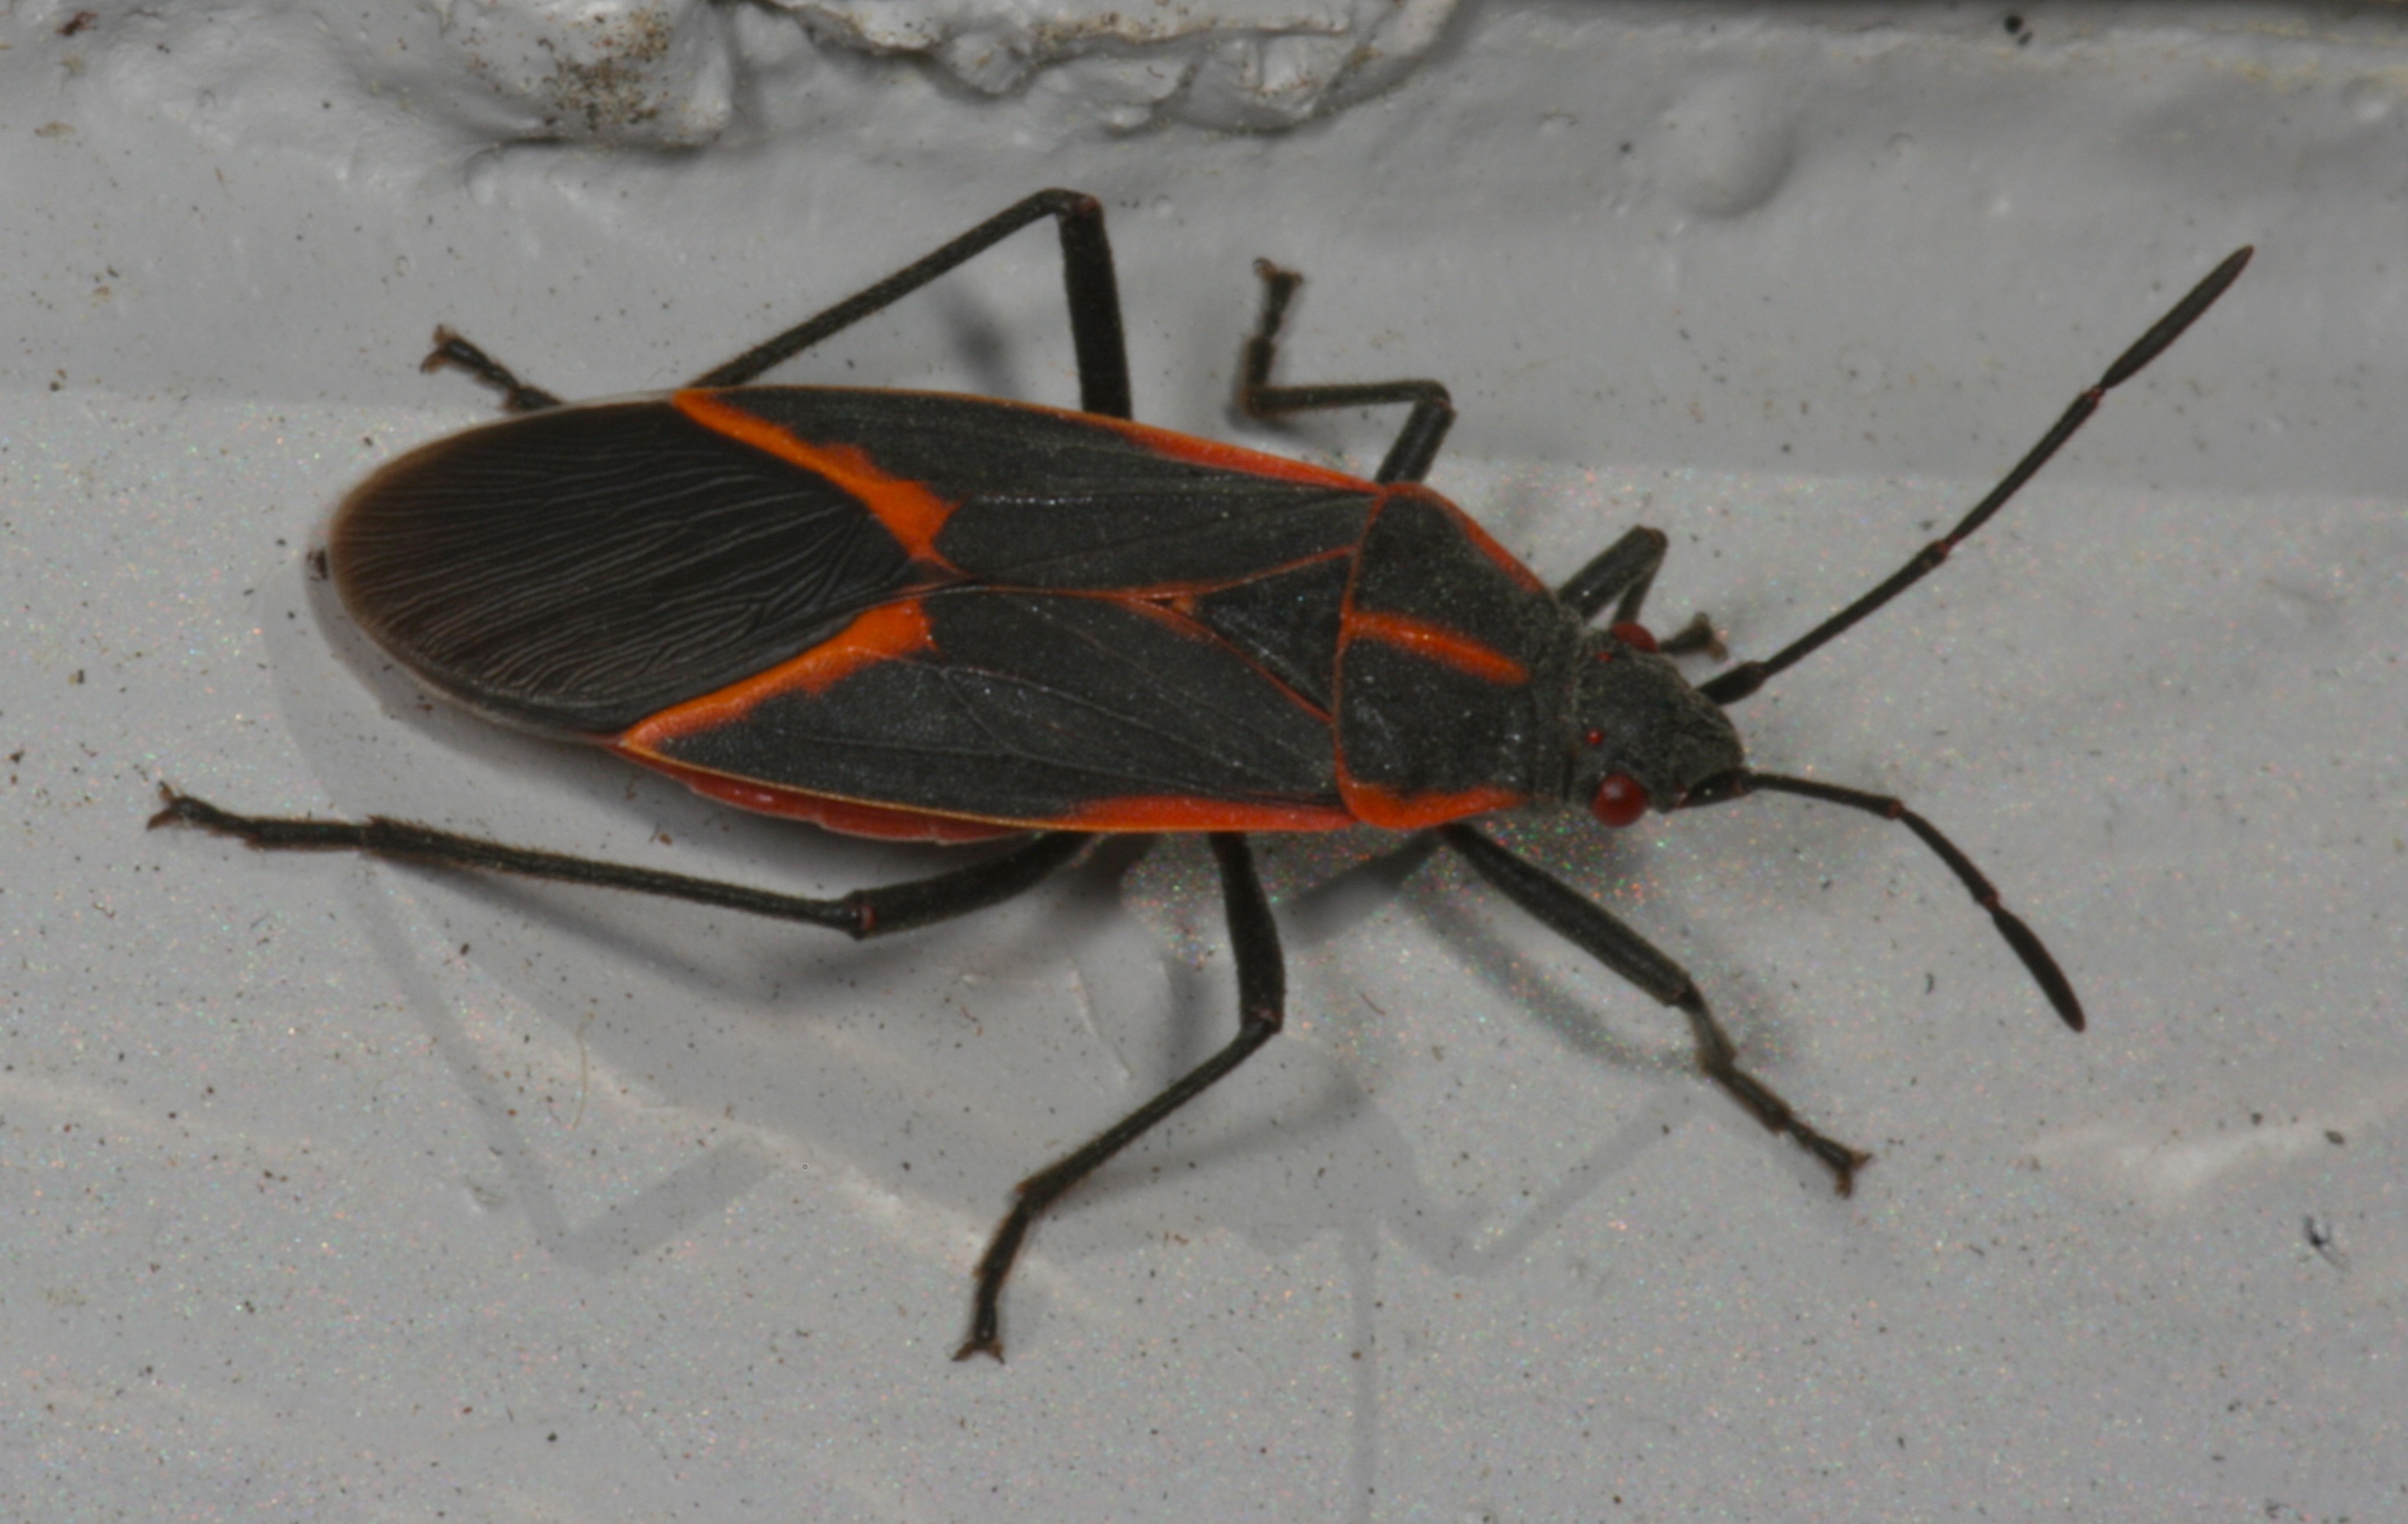 The eastern boxelder bug, Boisea trivittata, is widespread throughout 